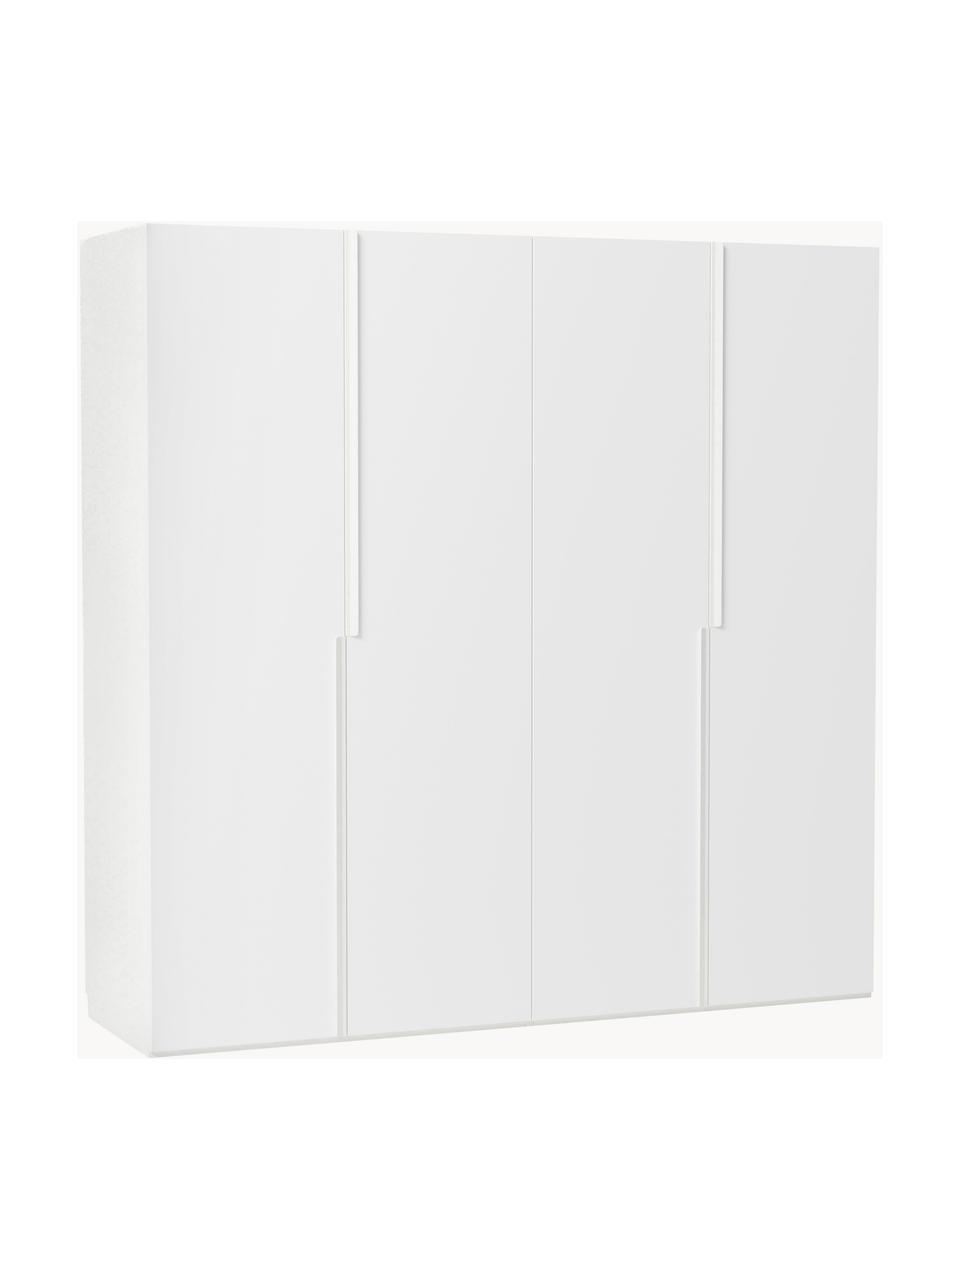 Modulární skříň s otočnými dveřmi Leon, šířka 200 cm, více variant, Bílá, Interiér Classic, Š 200 x V 236 cm